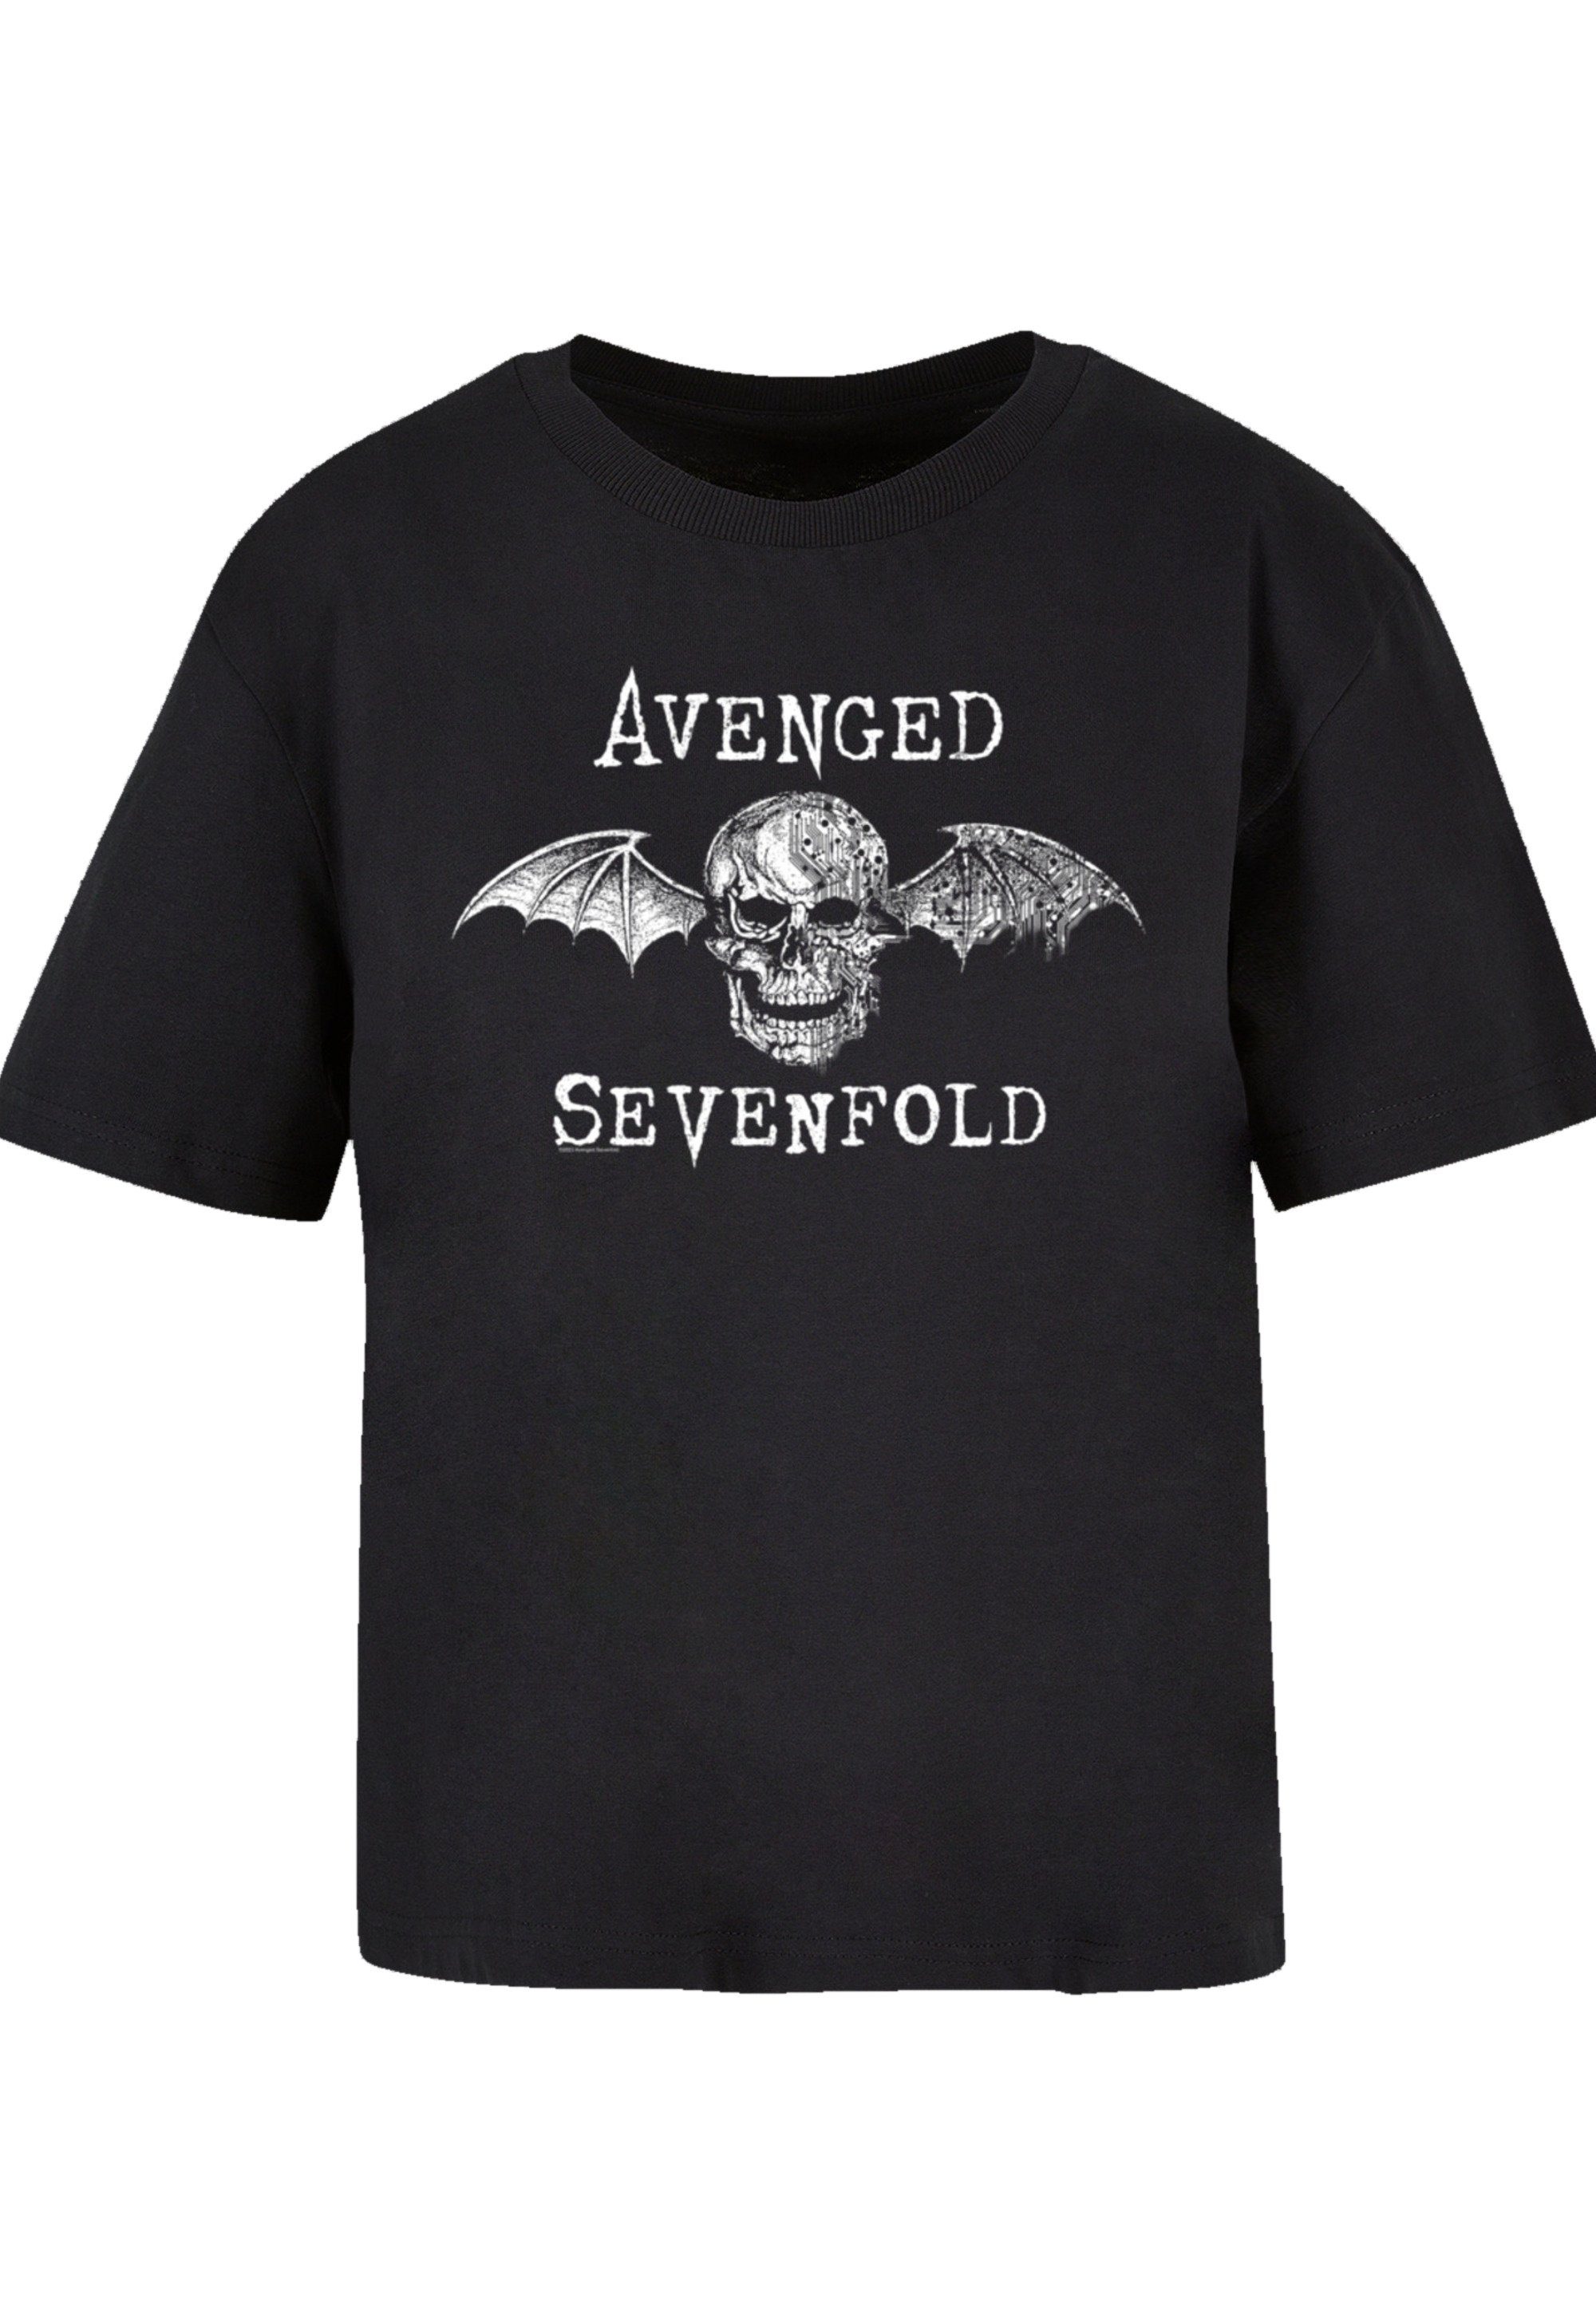 Qualität, Band, Cyborg T-Shirt Bat Sevenfold Rock Band F4NT4STIC Rock-Musik Premium Avenged Metal